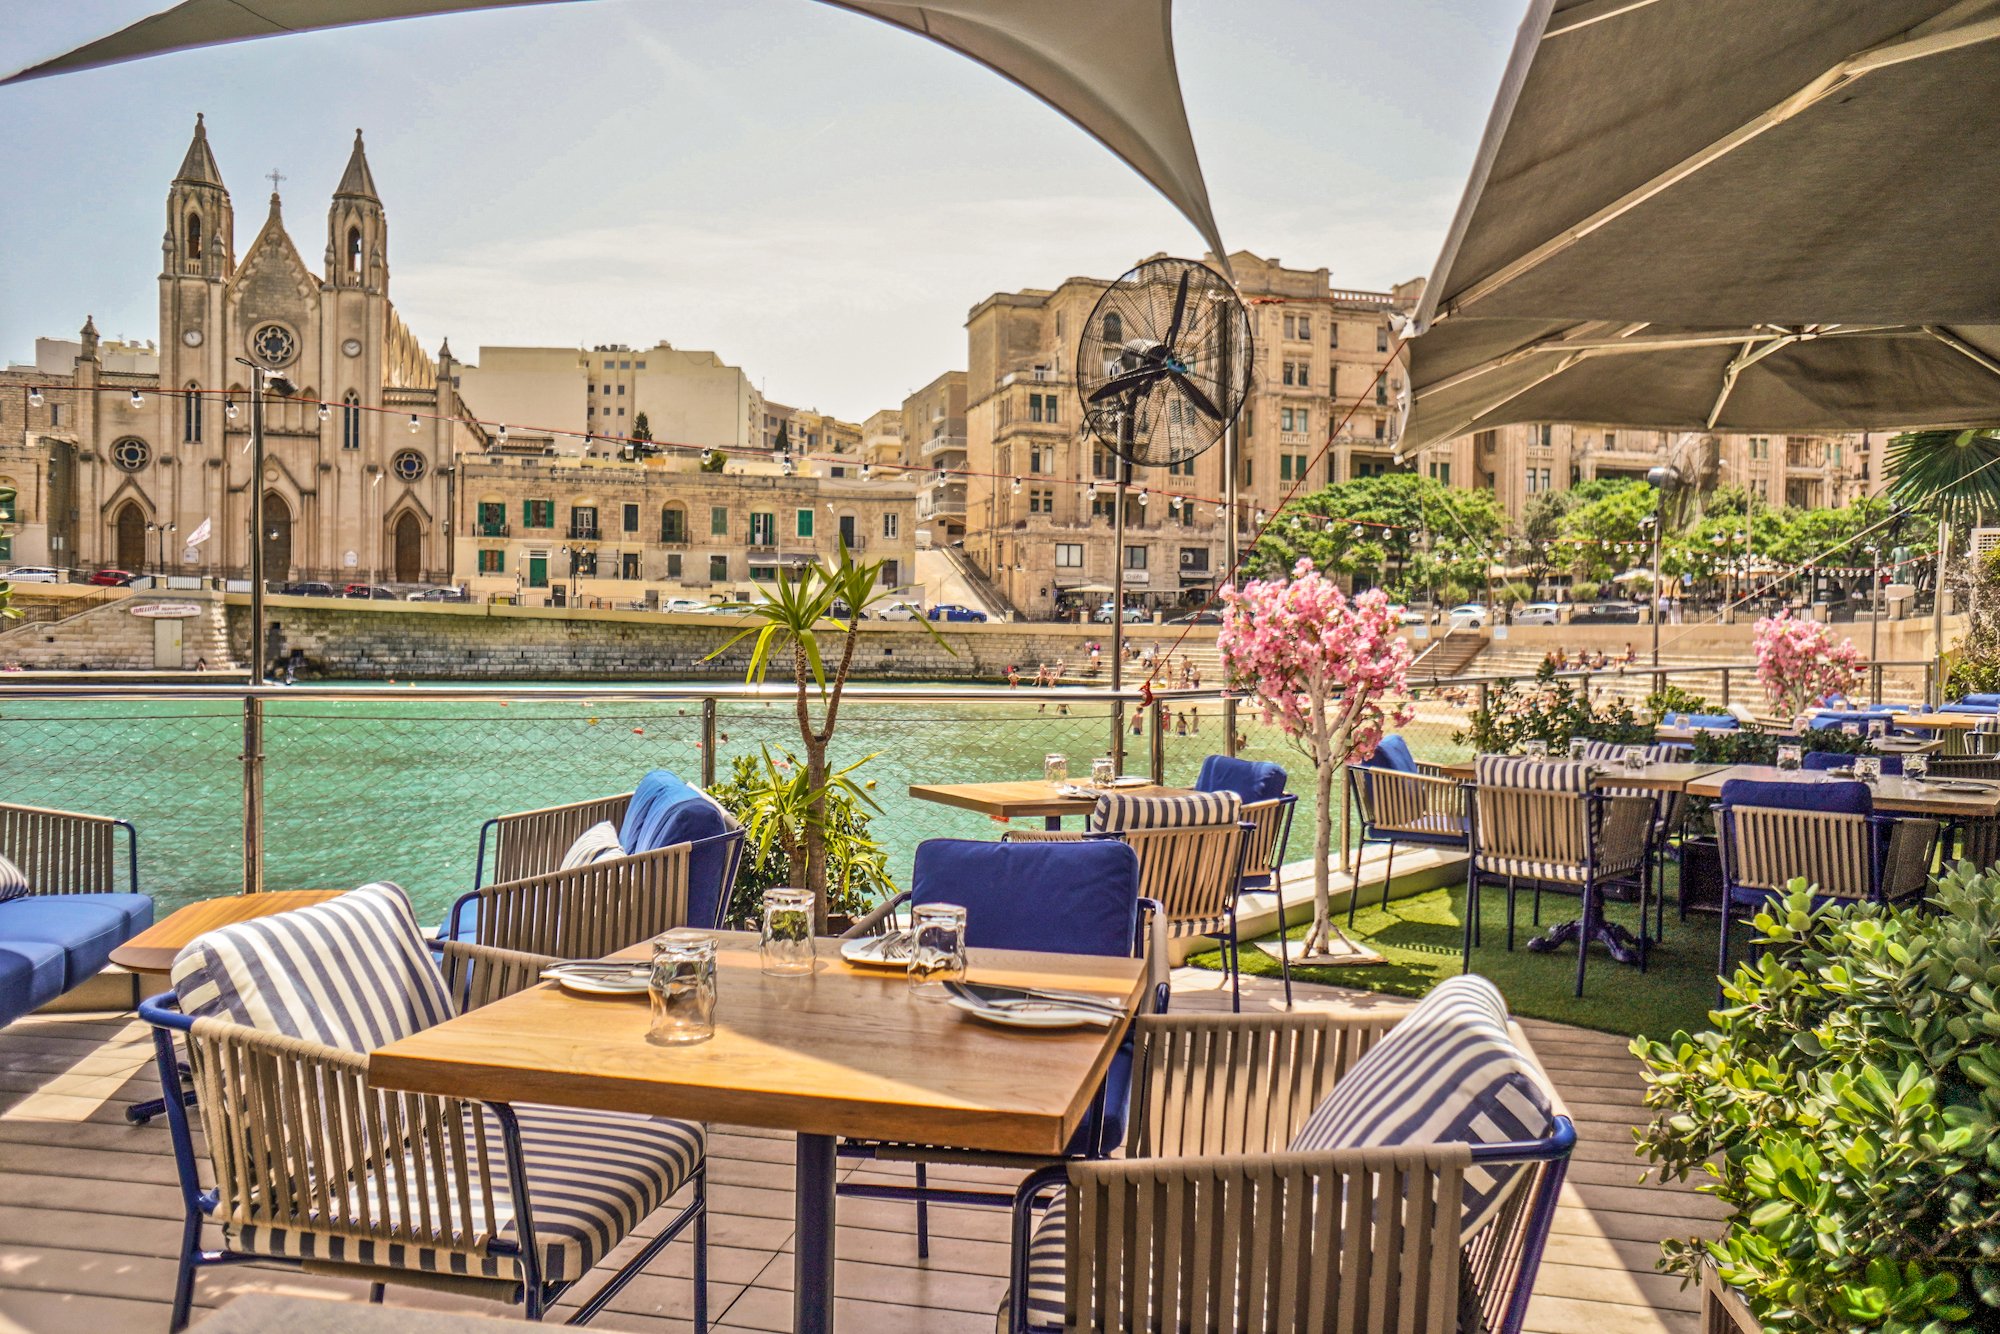 NAAR RestoBar - Malta restaurants with a view